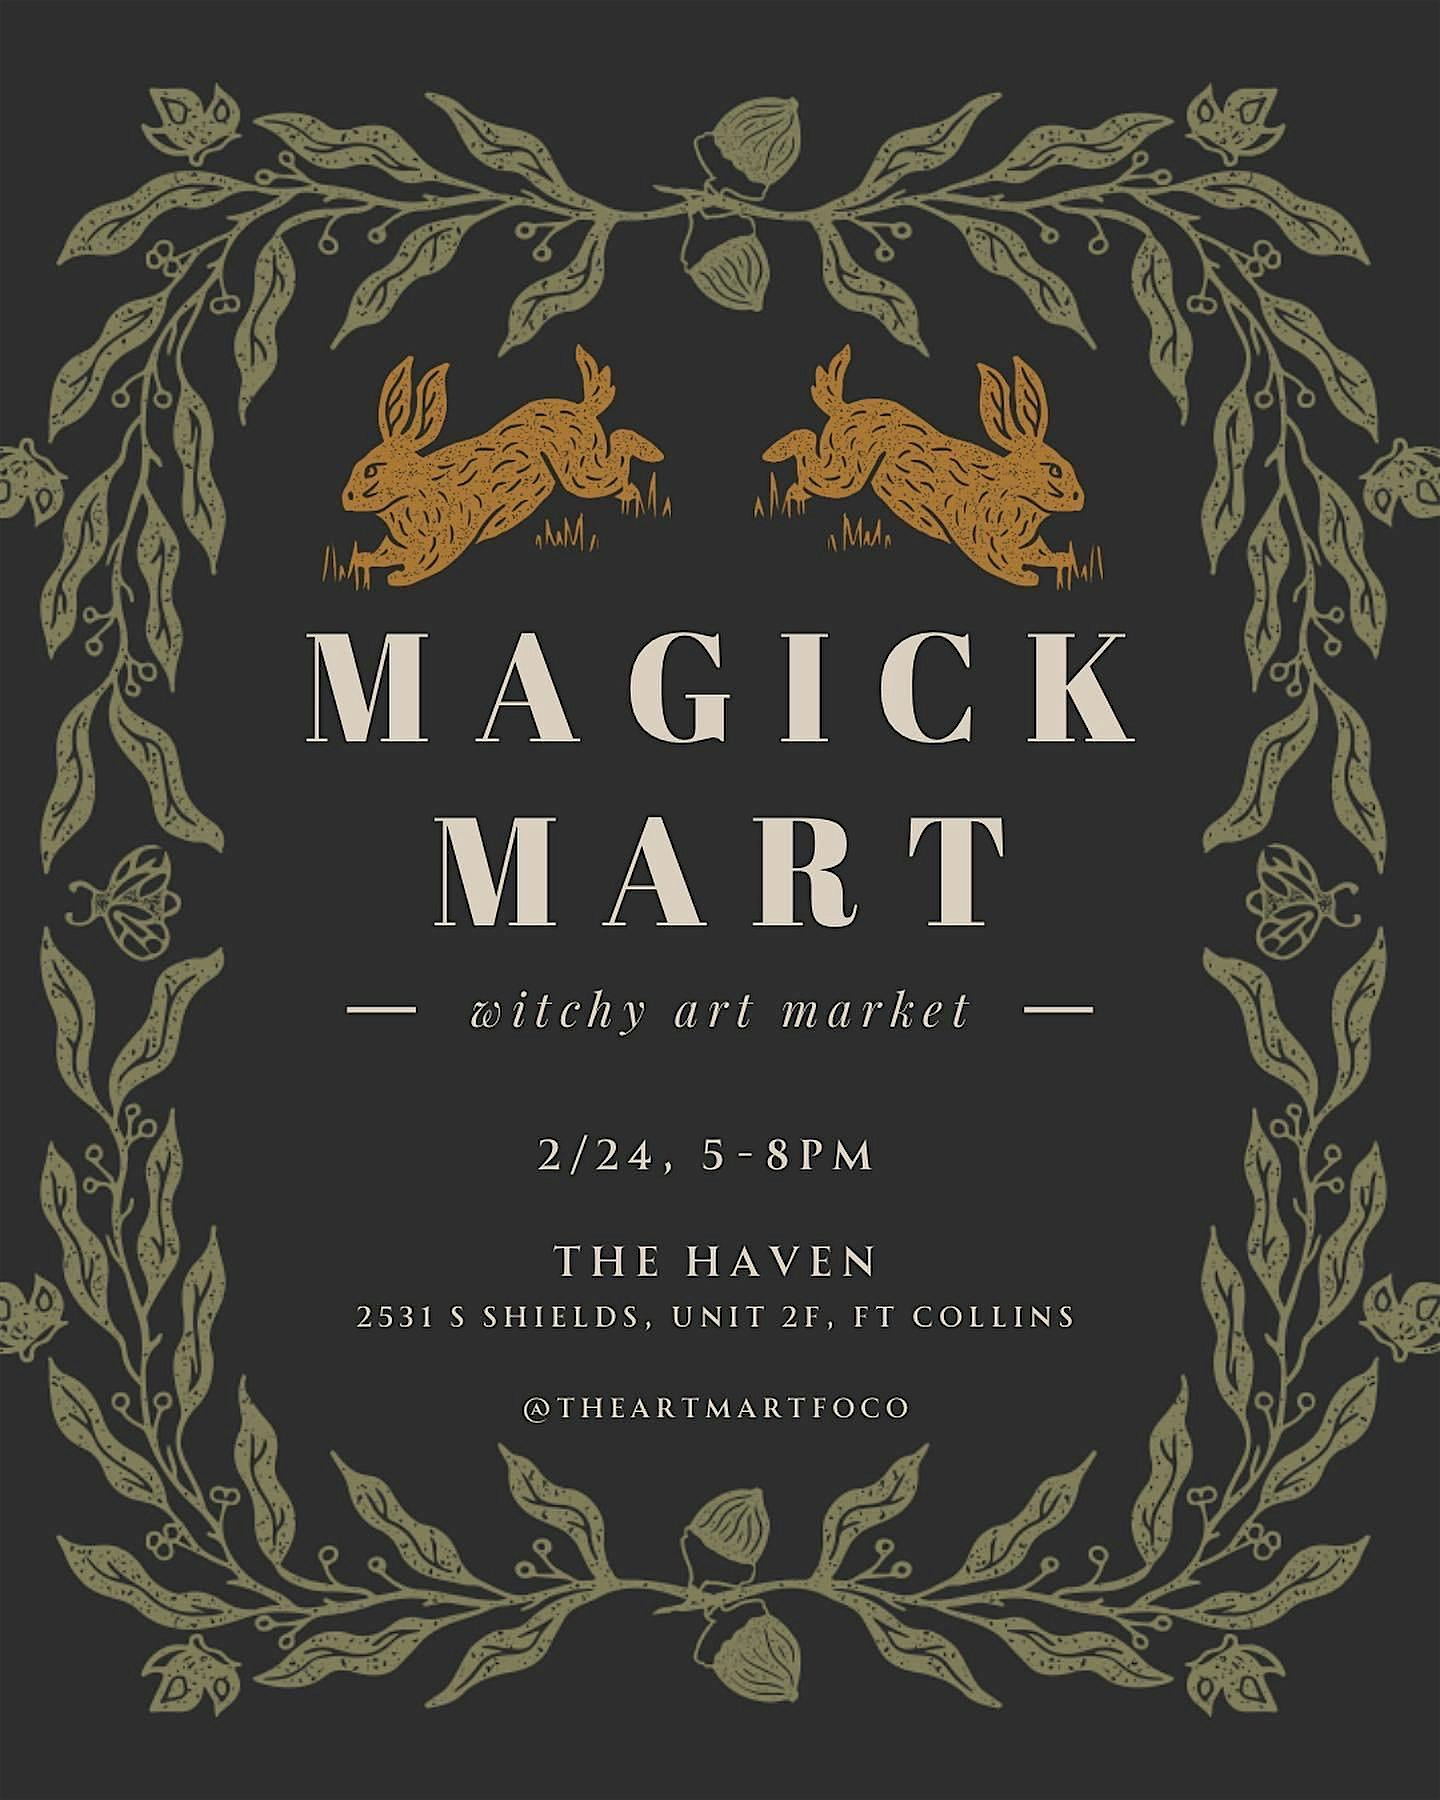 Magick Mart: a witchy art market